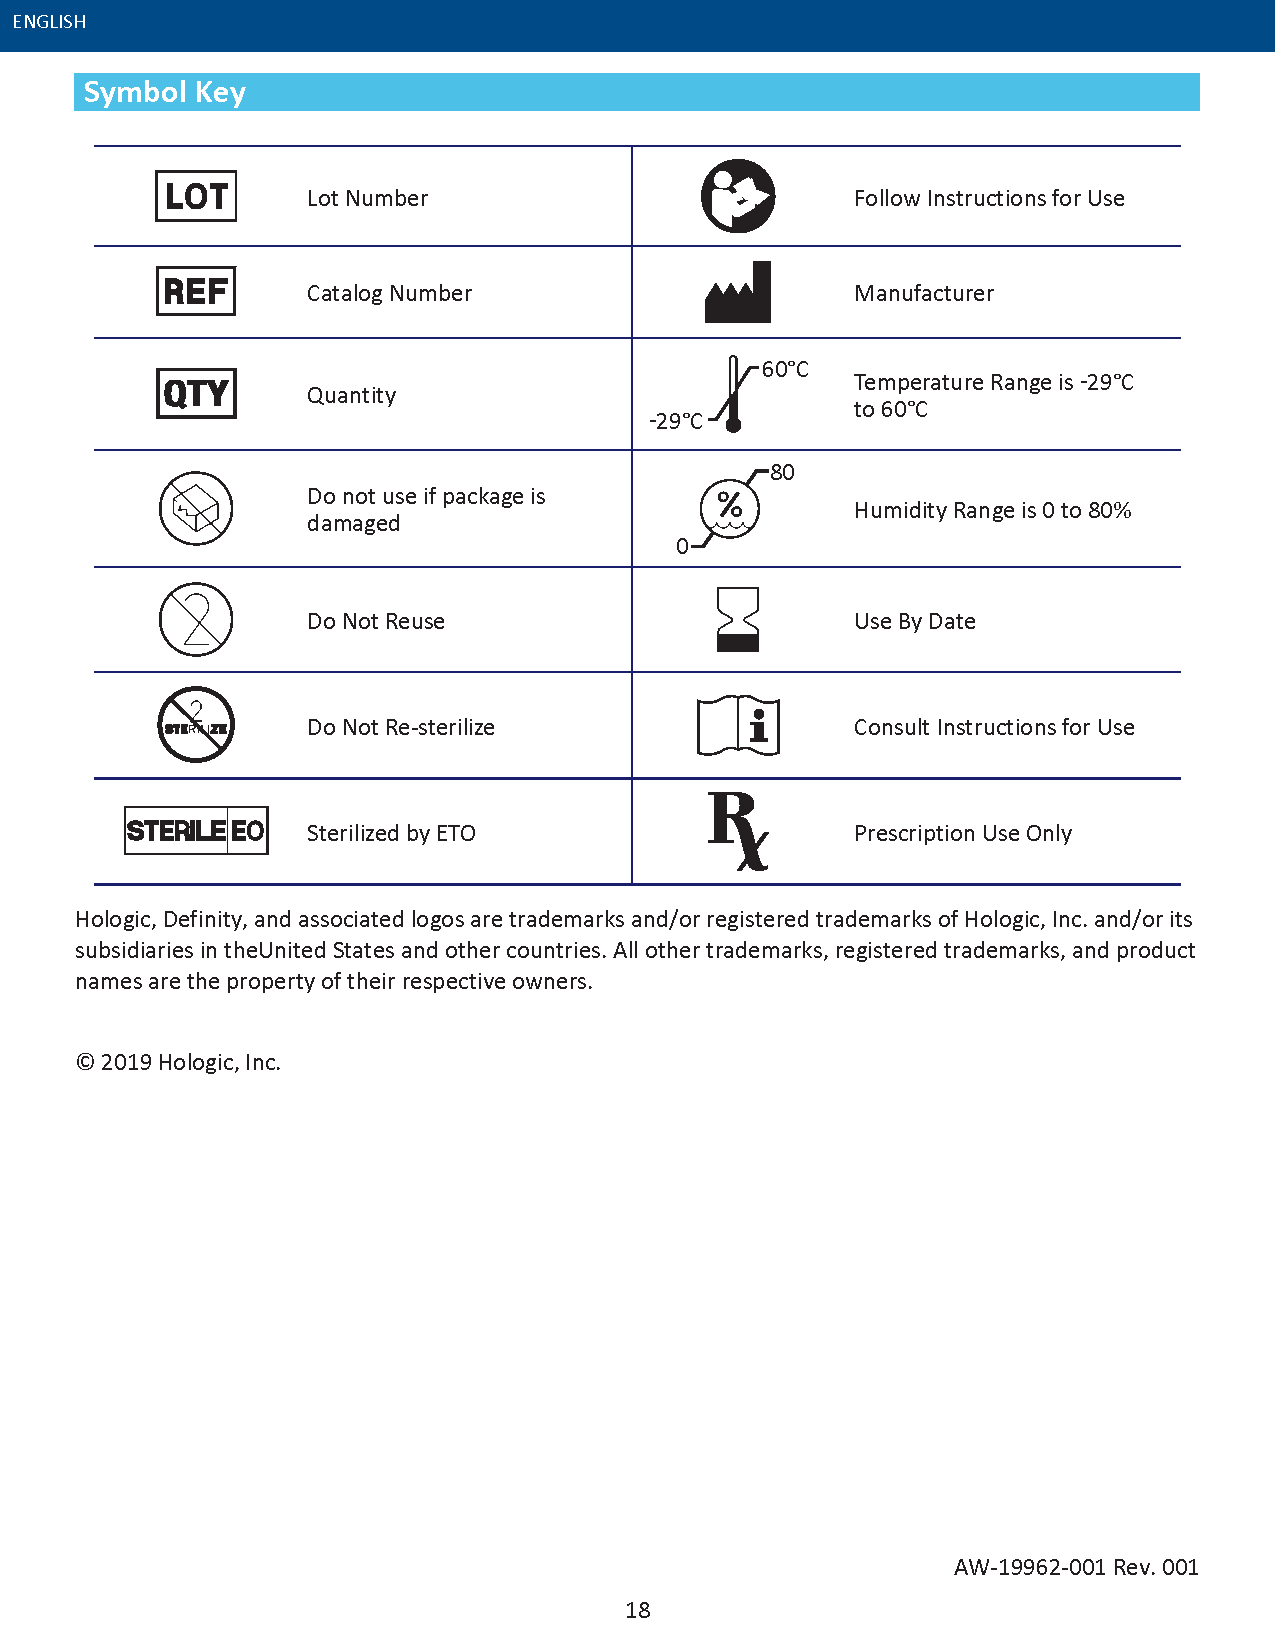 IFU symbols